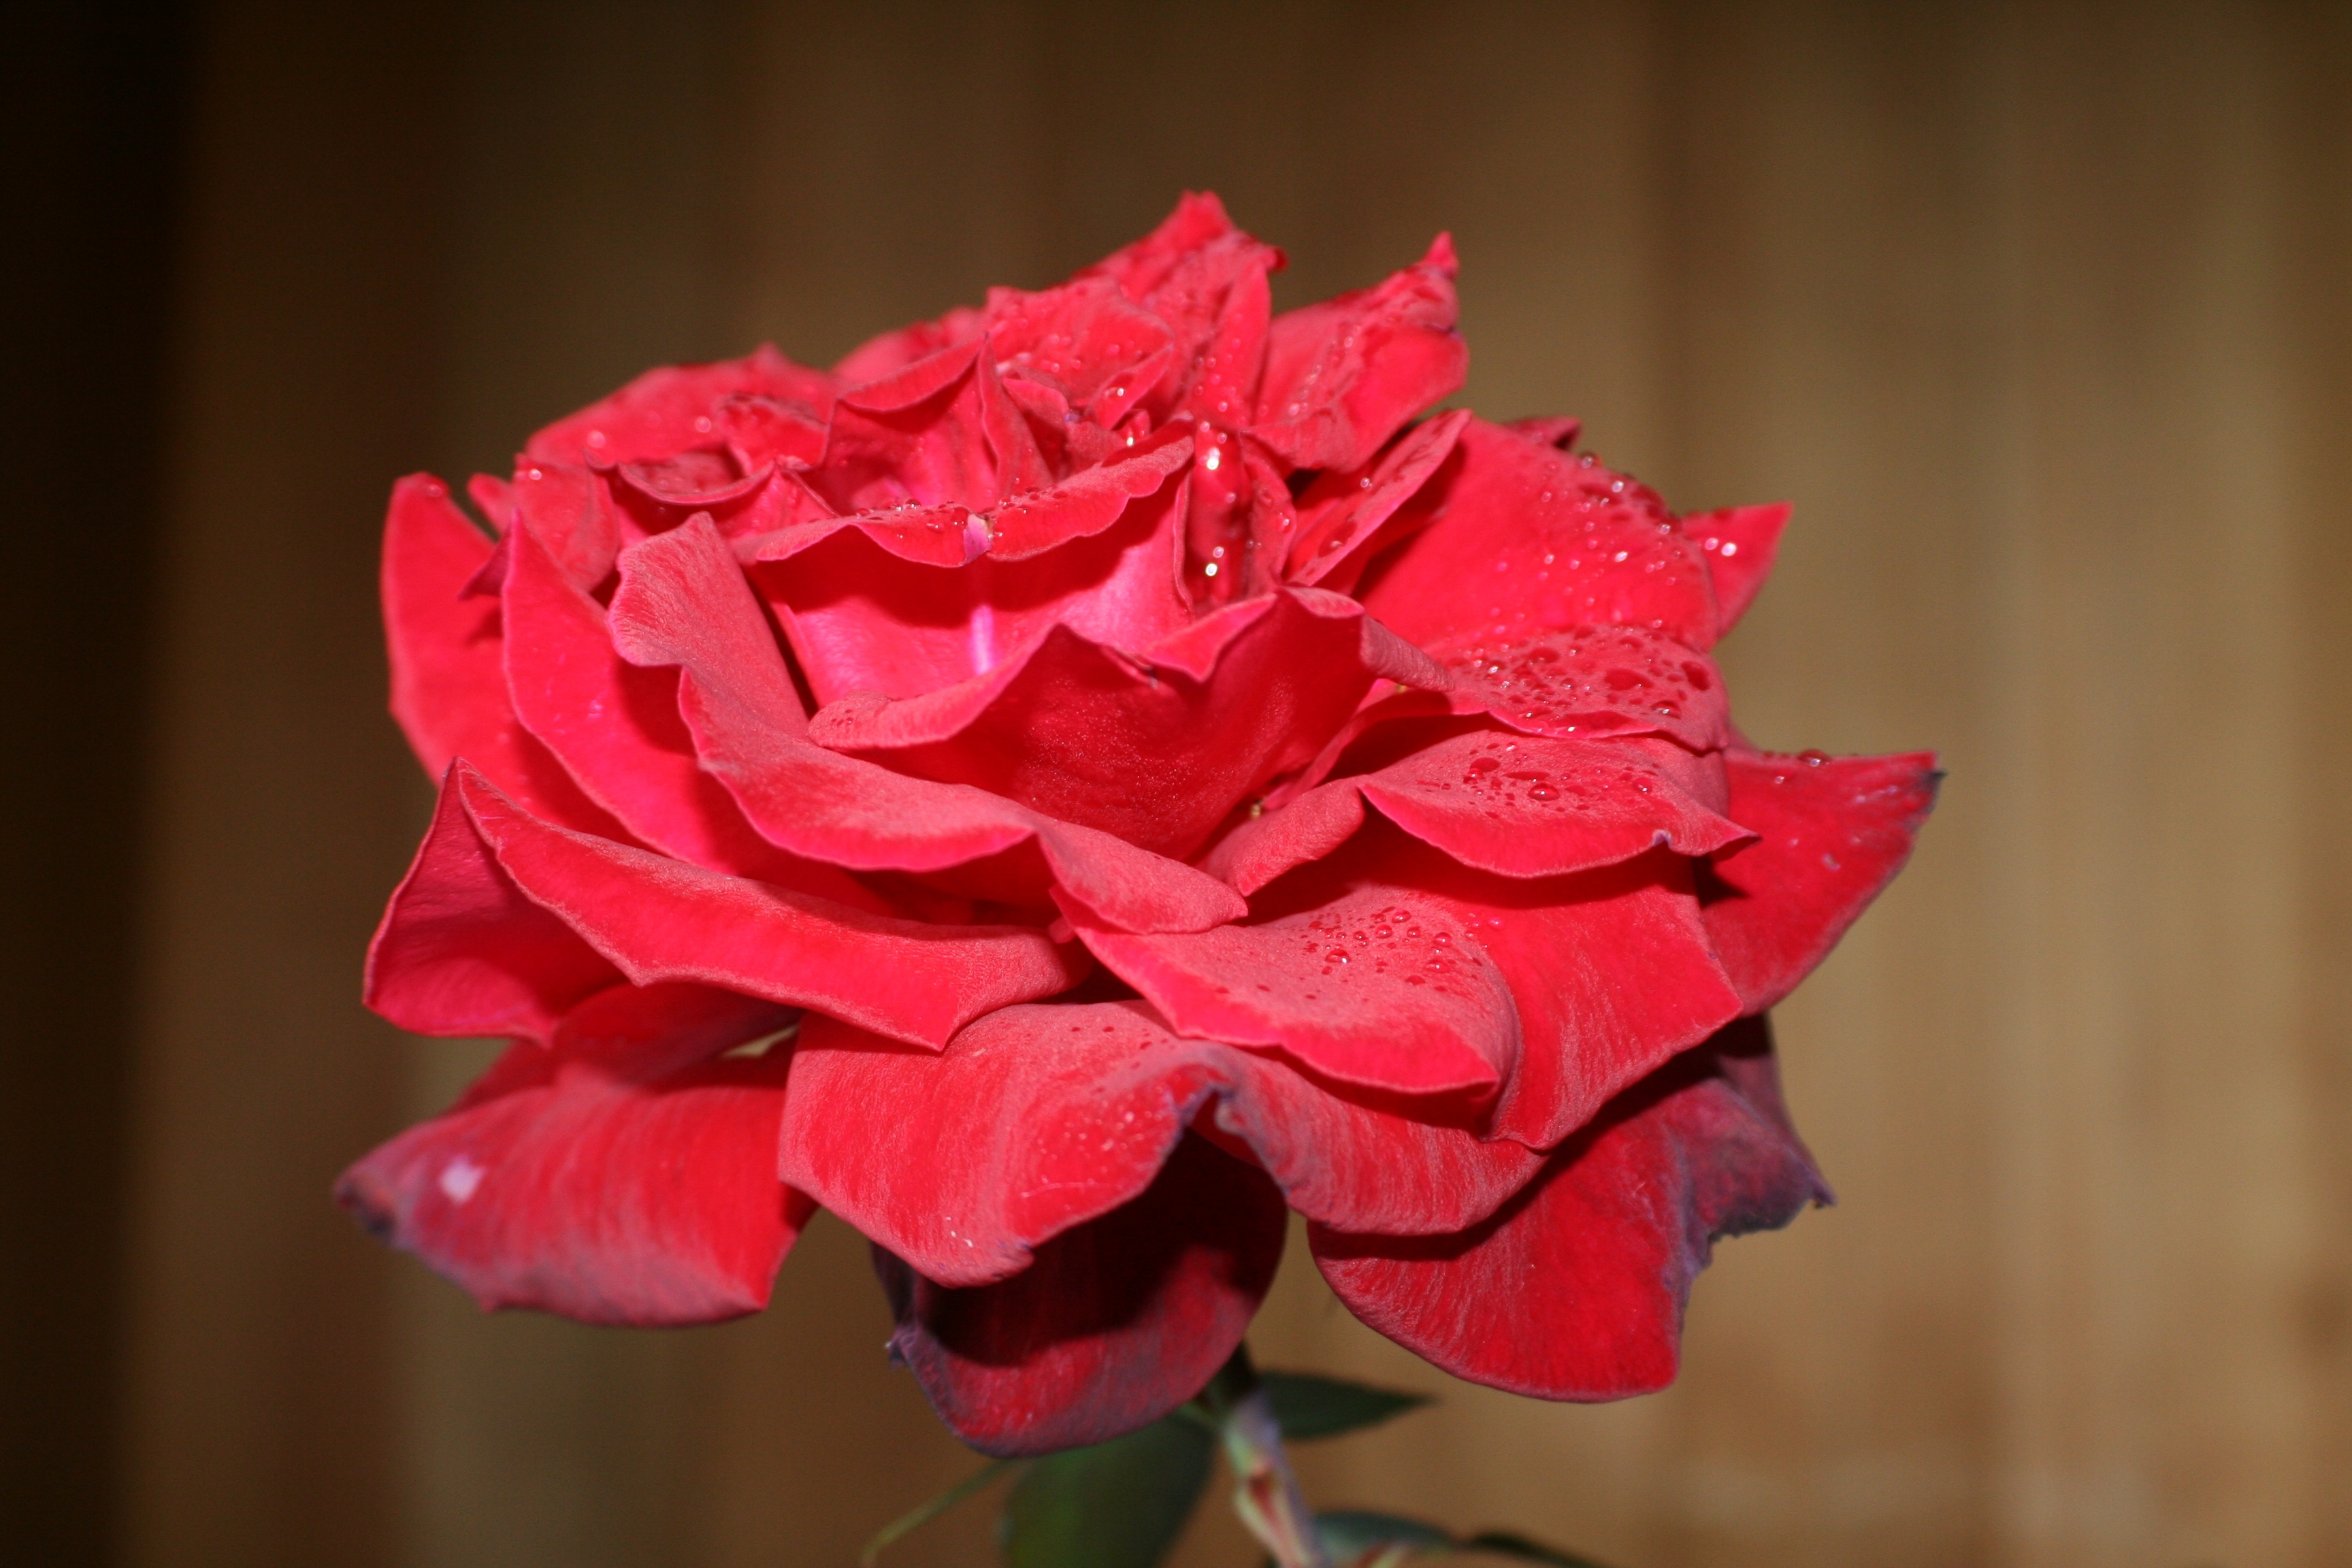 Wallpapers red rose drops petals on the desktop